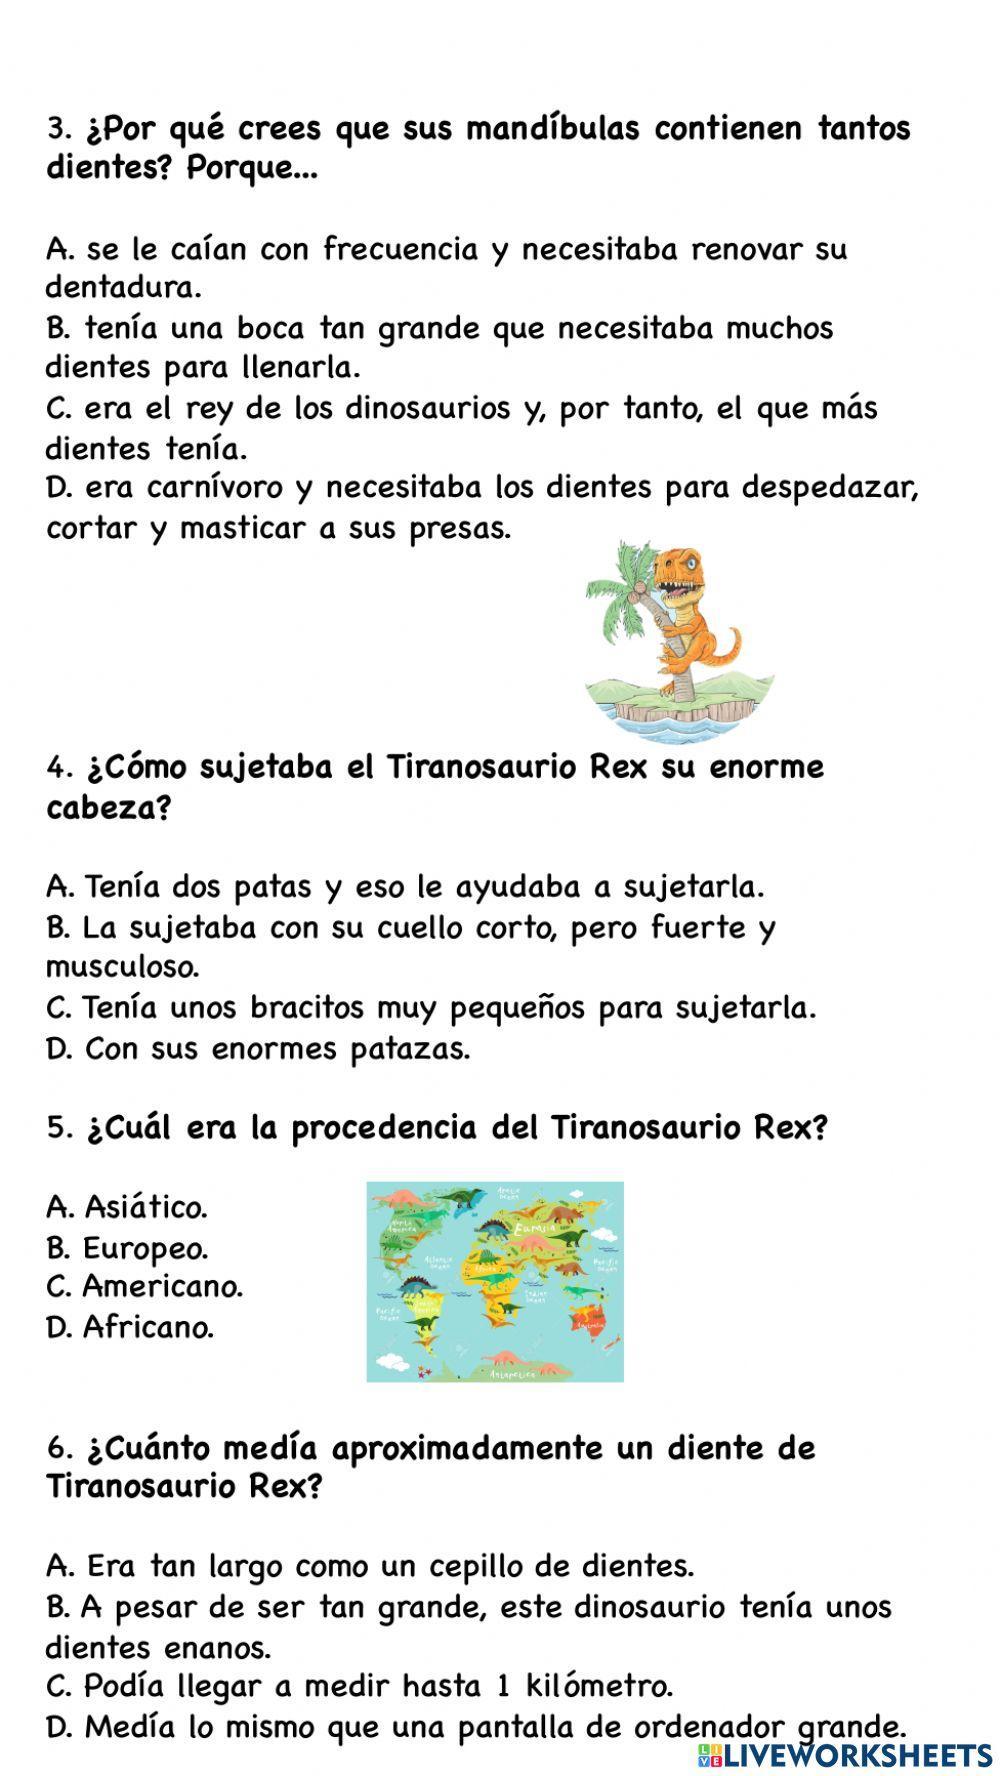 El tiranosaurio Rex